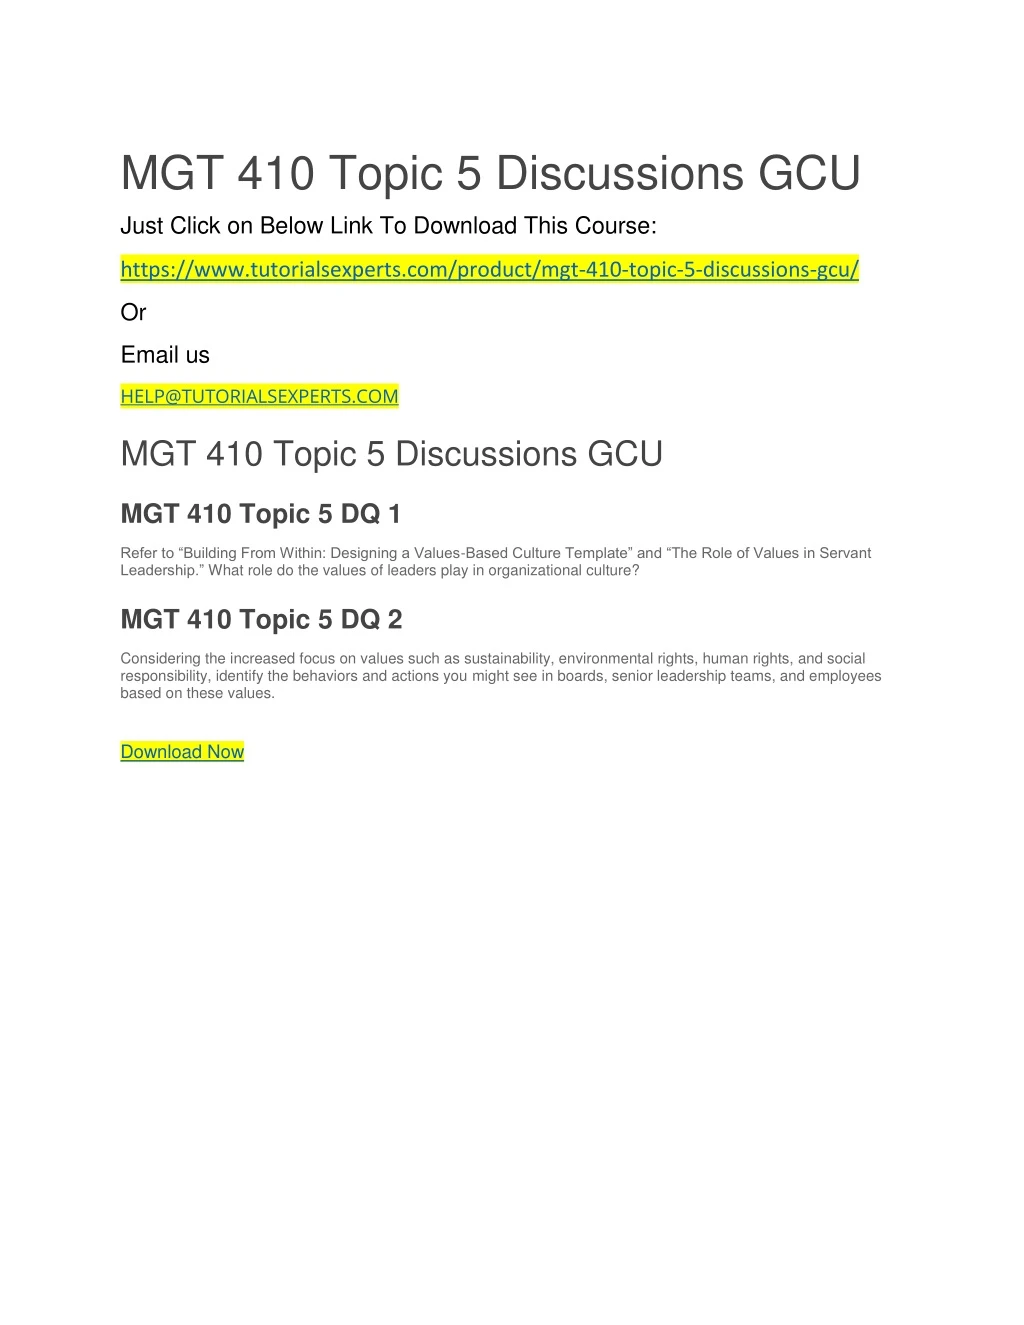 mgt 410 topic 5 discussions gcu just click